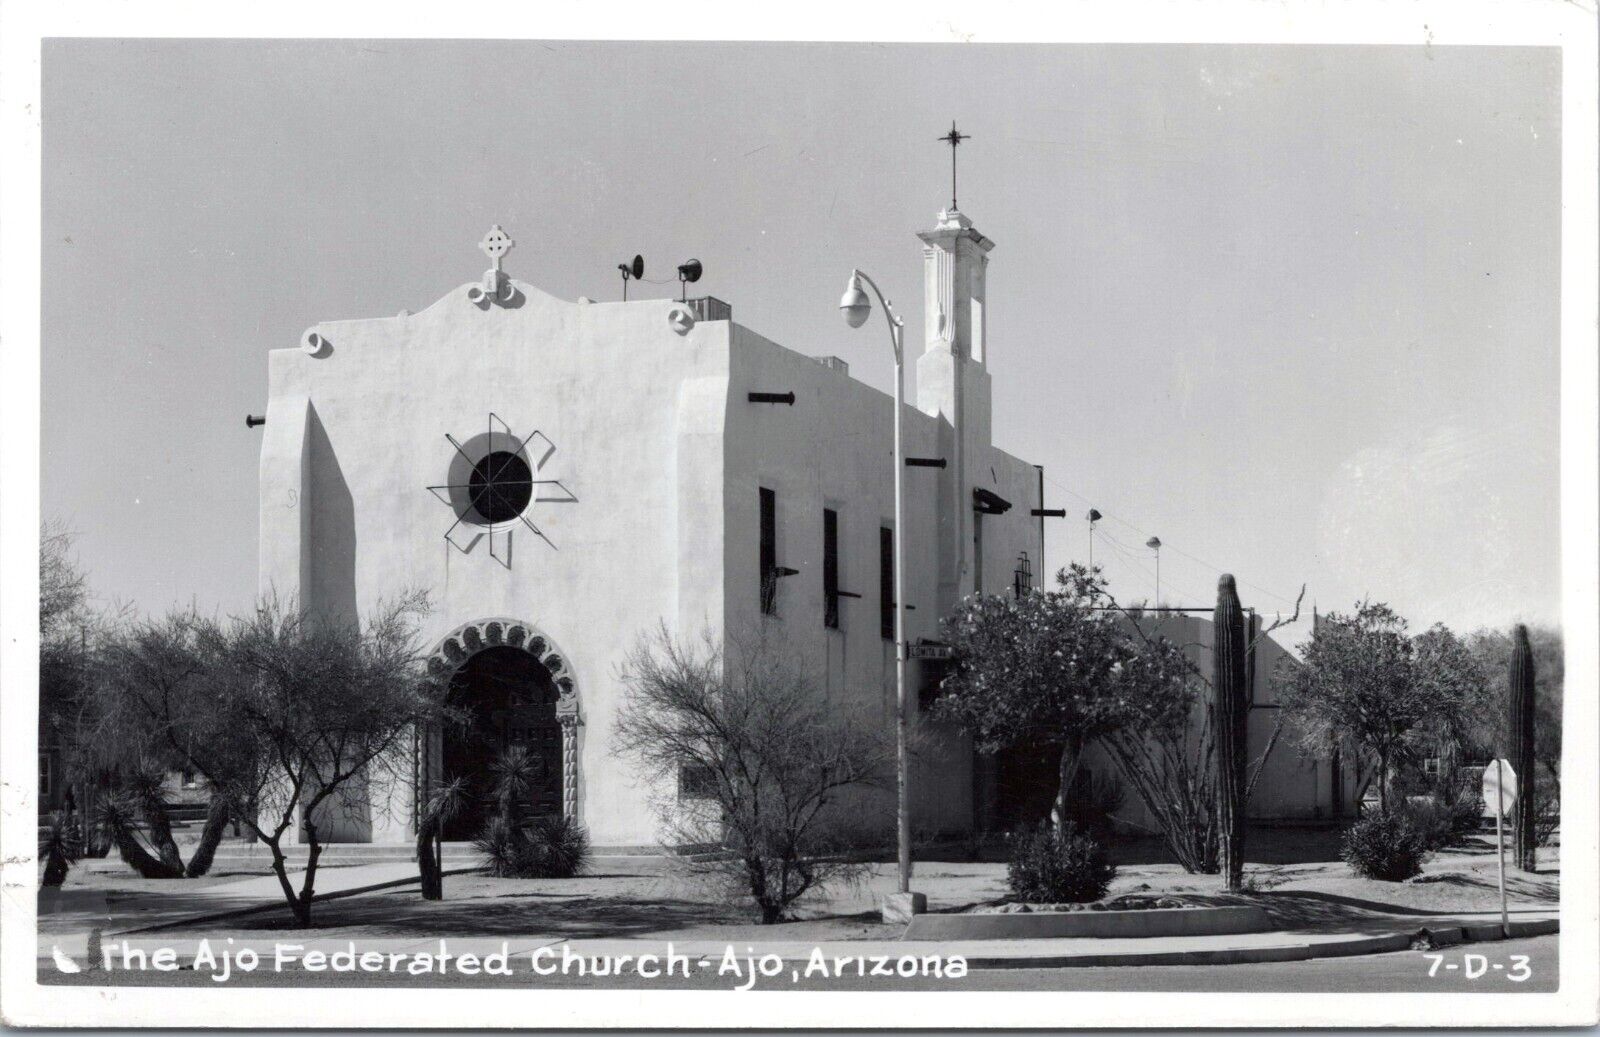 RPPC Ajo Federated Church, Ajo, Arizona - Real Photo Postcard - Methodist c1950s